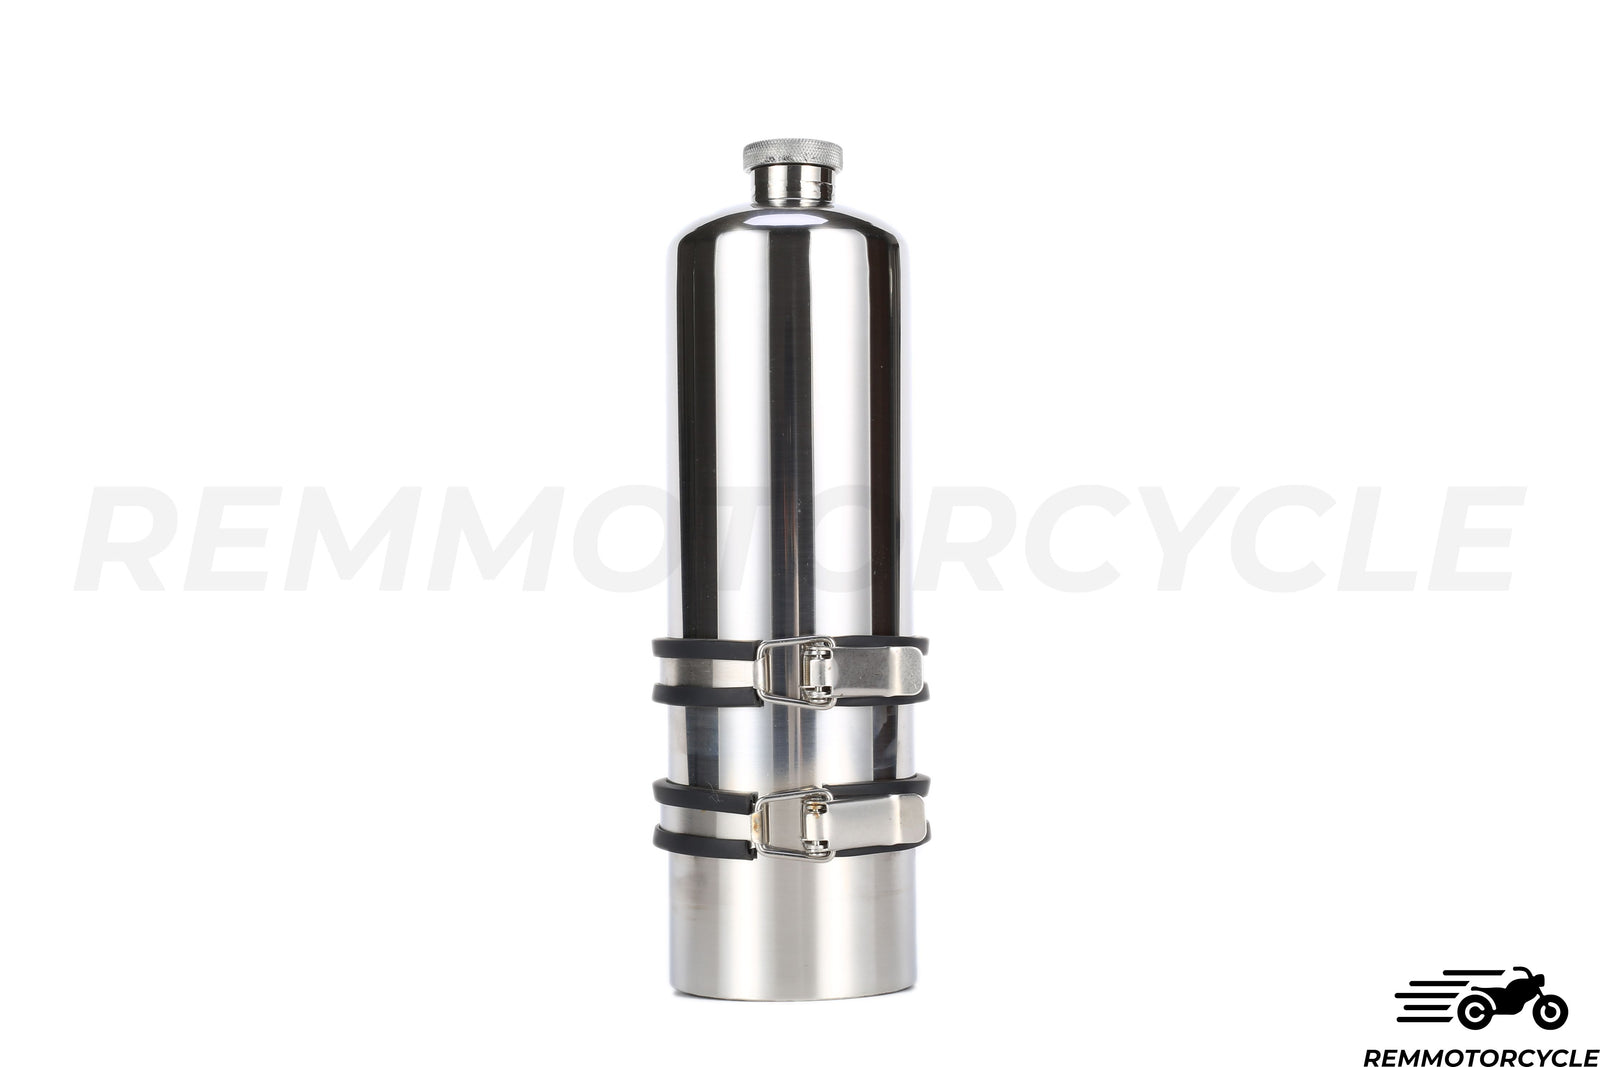 Botol jenis motor reservoir tambahan dalam tutup aluminium 1,5 L dengan dukungan